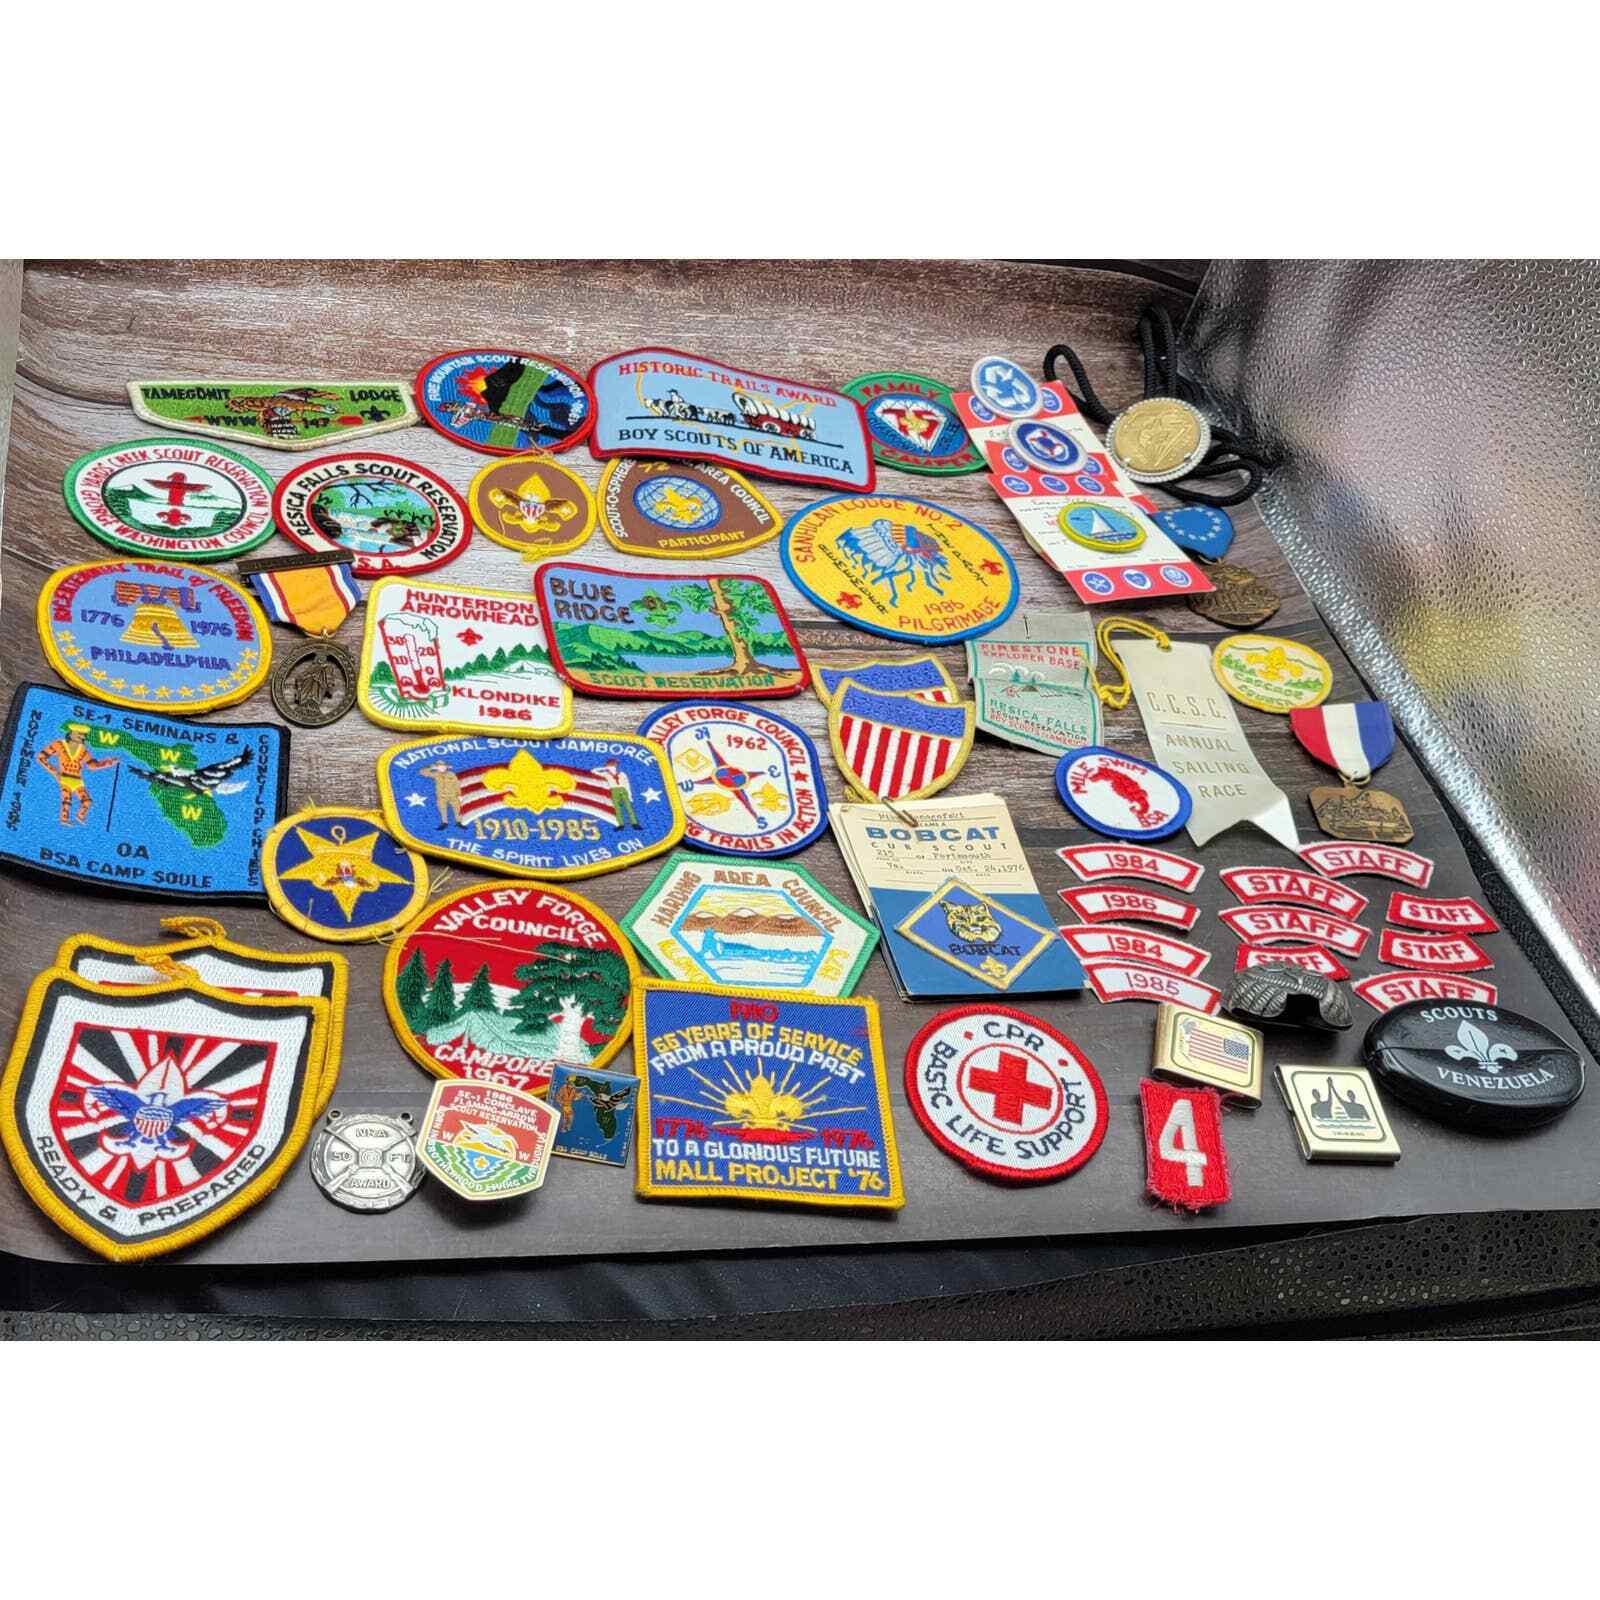 Massive Vintage Boy Scouts BSA collection of badges, medals, etc. 75+ pieces 